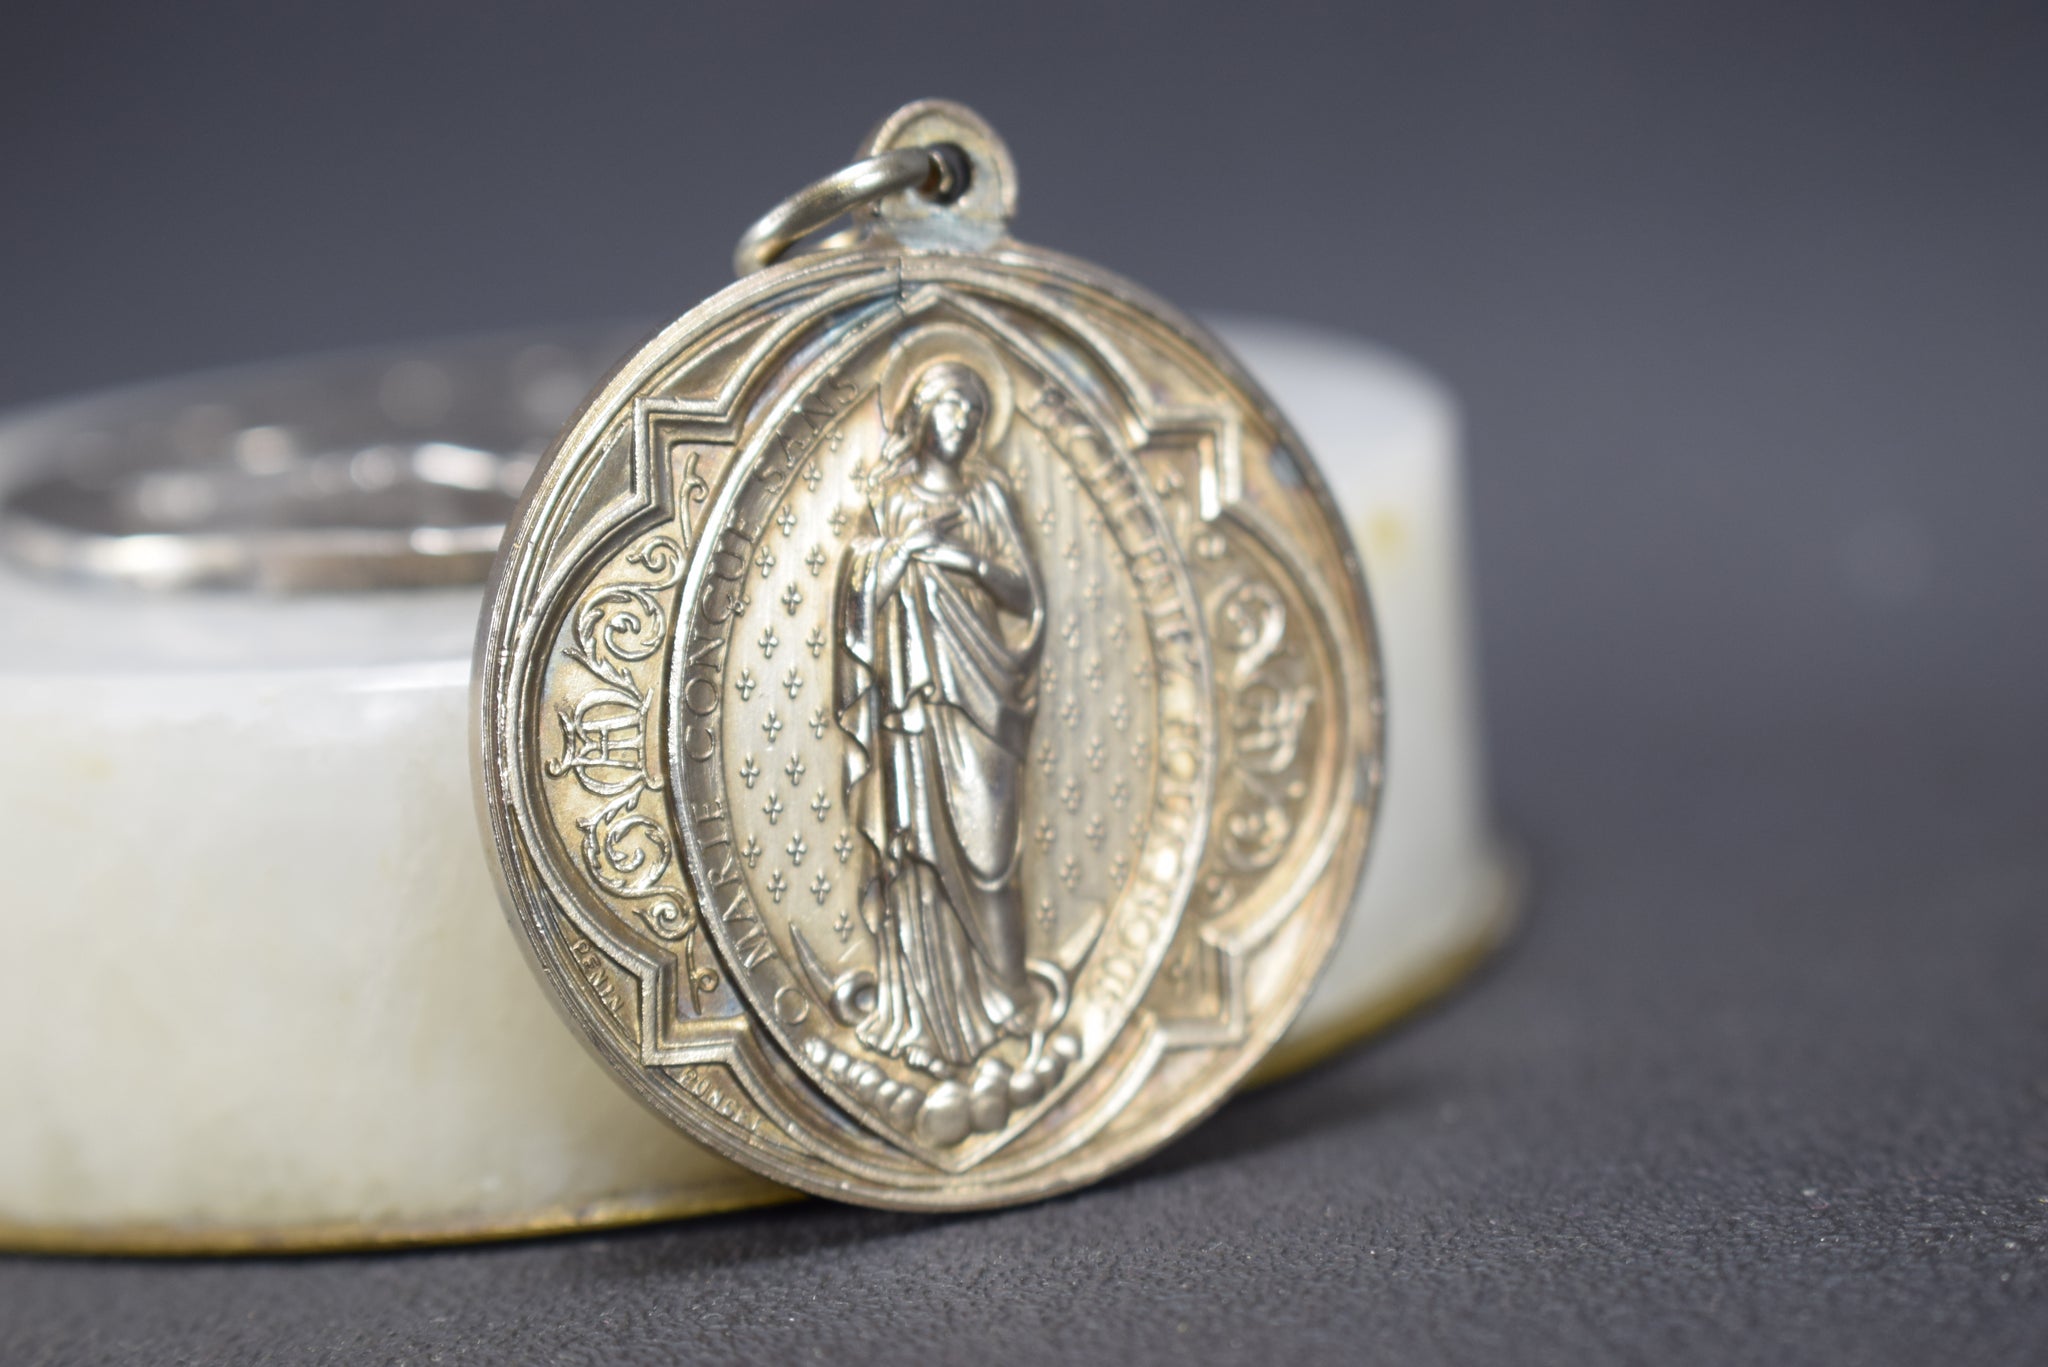 Blessed Virgin Mary Medal by Penin